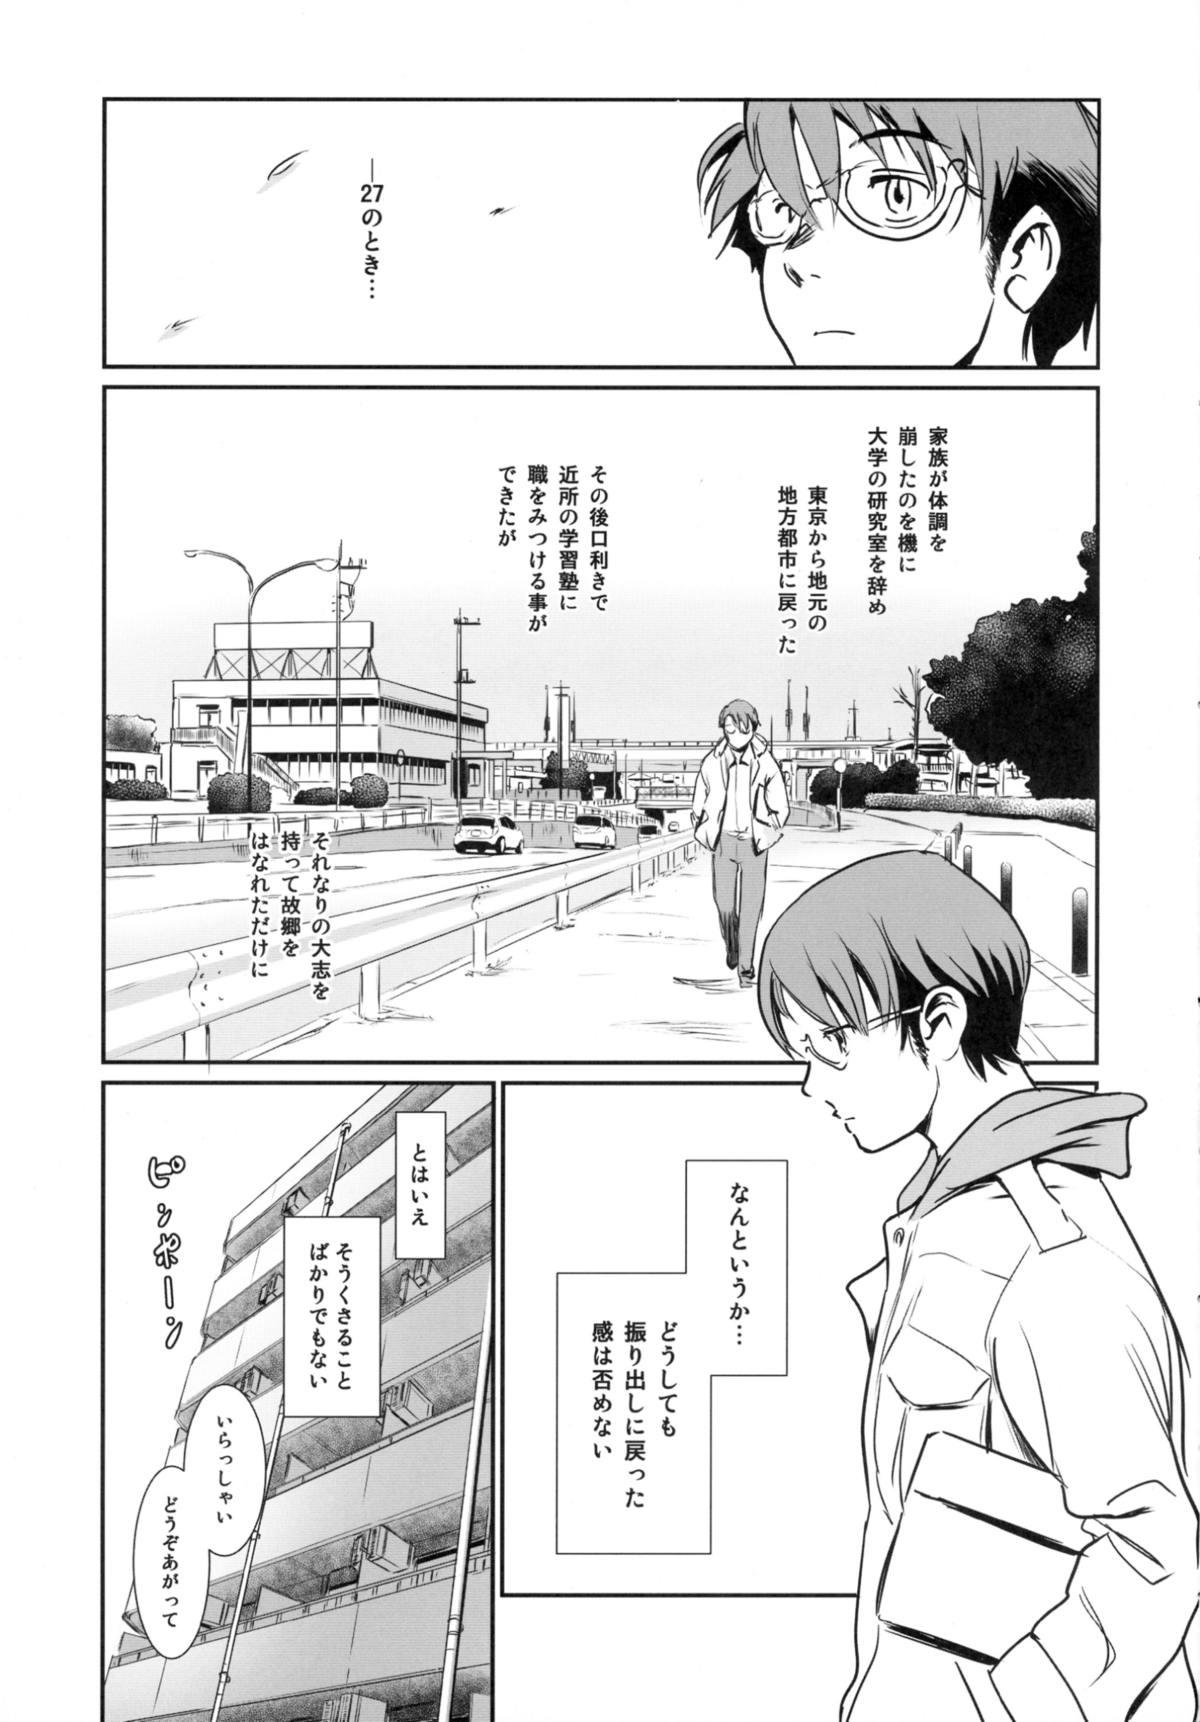 Story of the 'N' Situation - Situation#3 Mukashi no Otoko 4